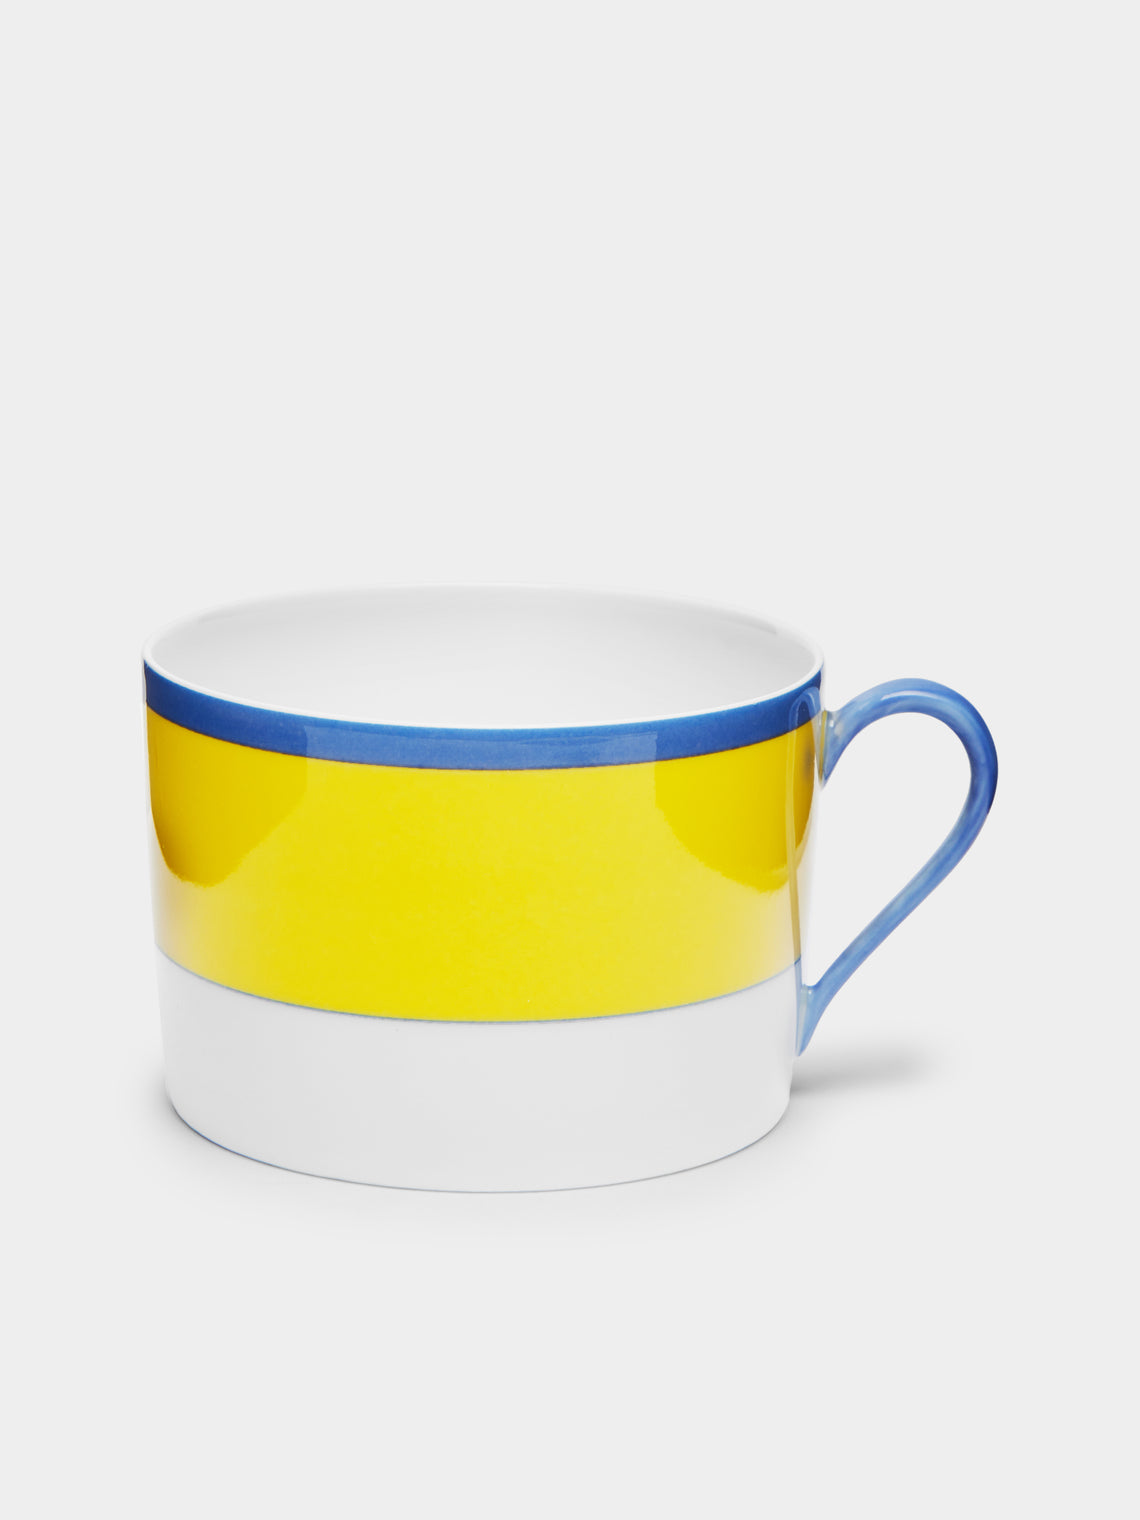 Robert Haviland & C. Parlon - Monet Porcelain Teacup and Saucer -  - ABASK